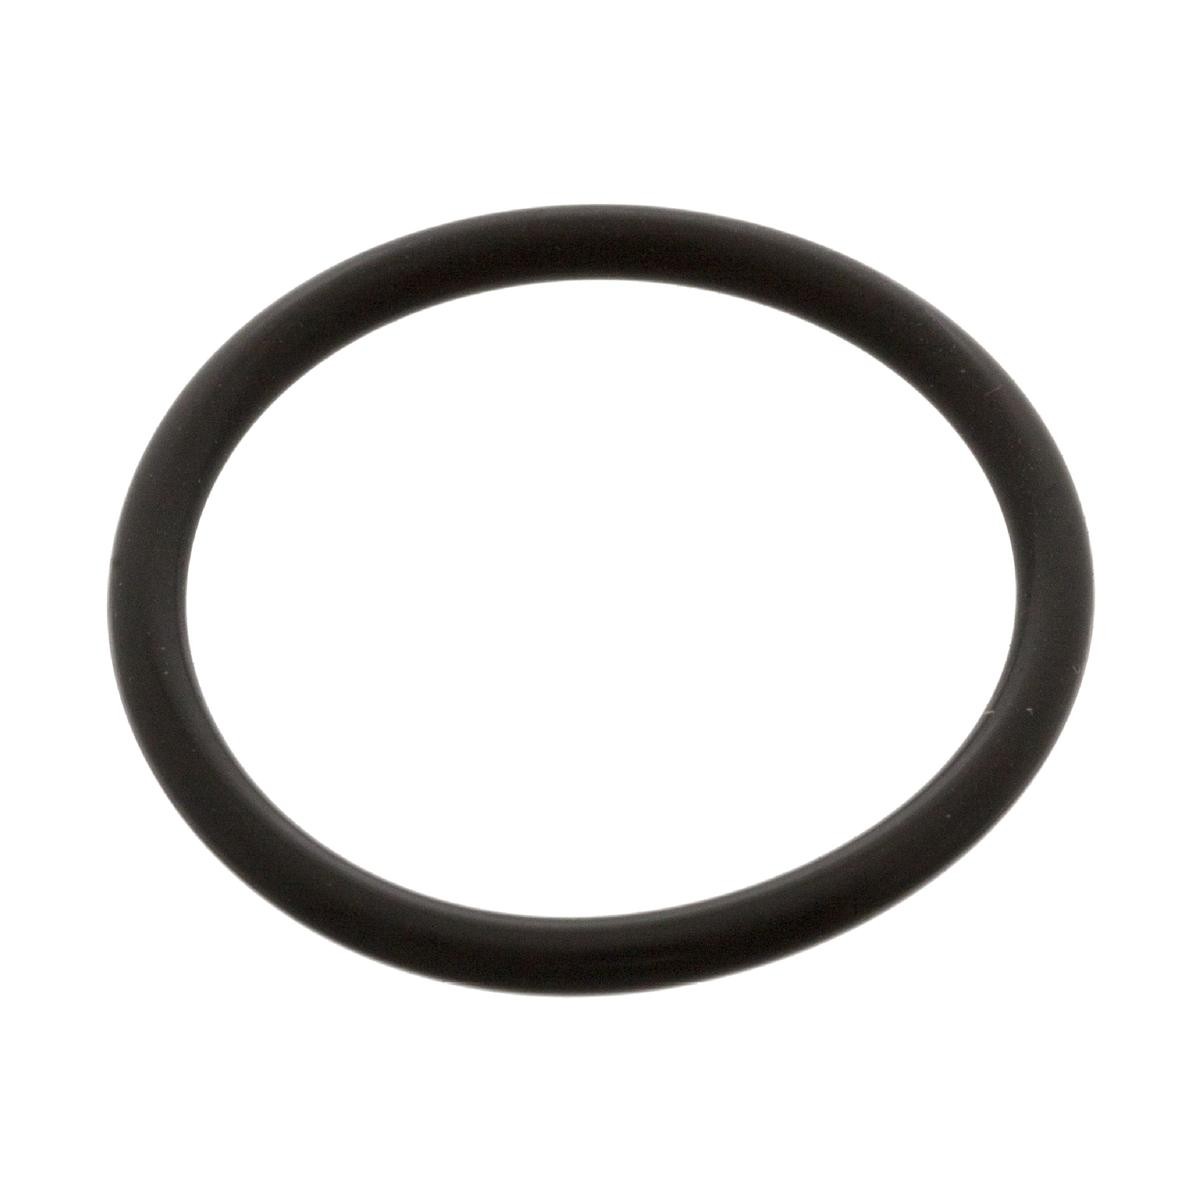 FEBI BILSTEIN 02200 Seal Ring 32 x 3 mm, NBR (nitrile butadiene rubber)